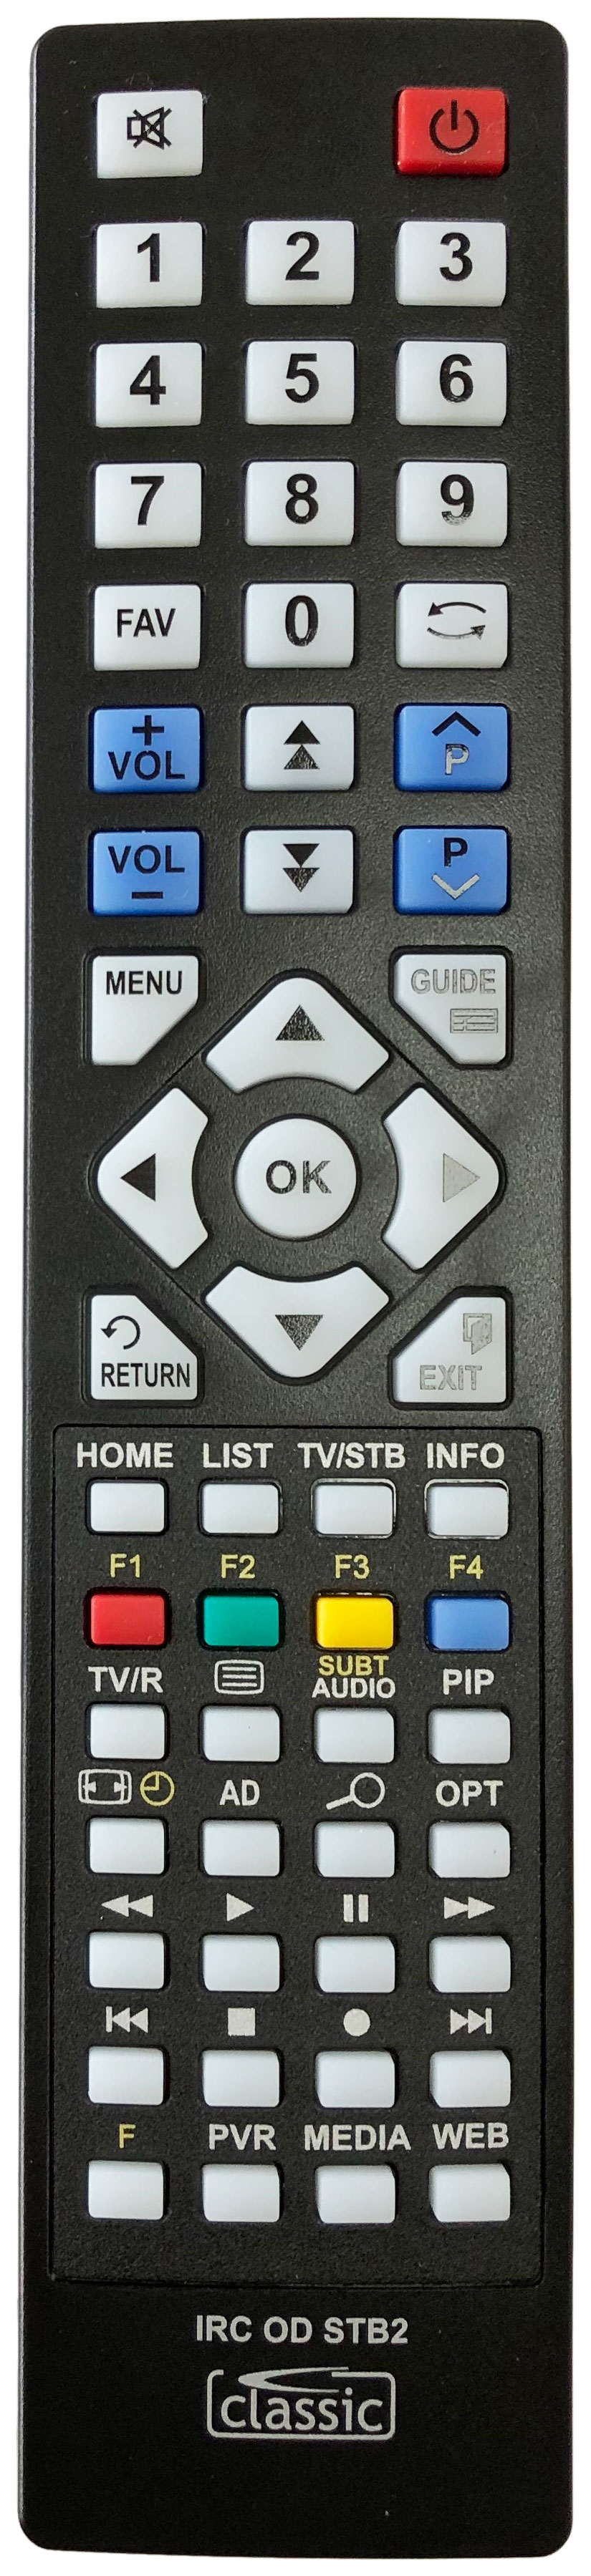 SAGEM DTR94500 Remote Control